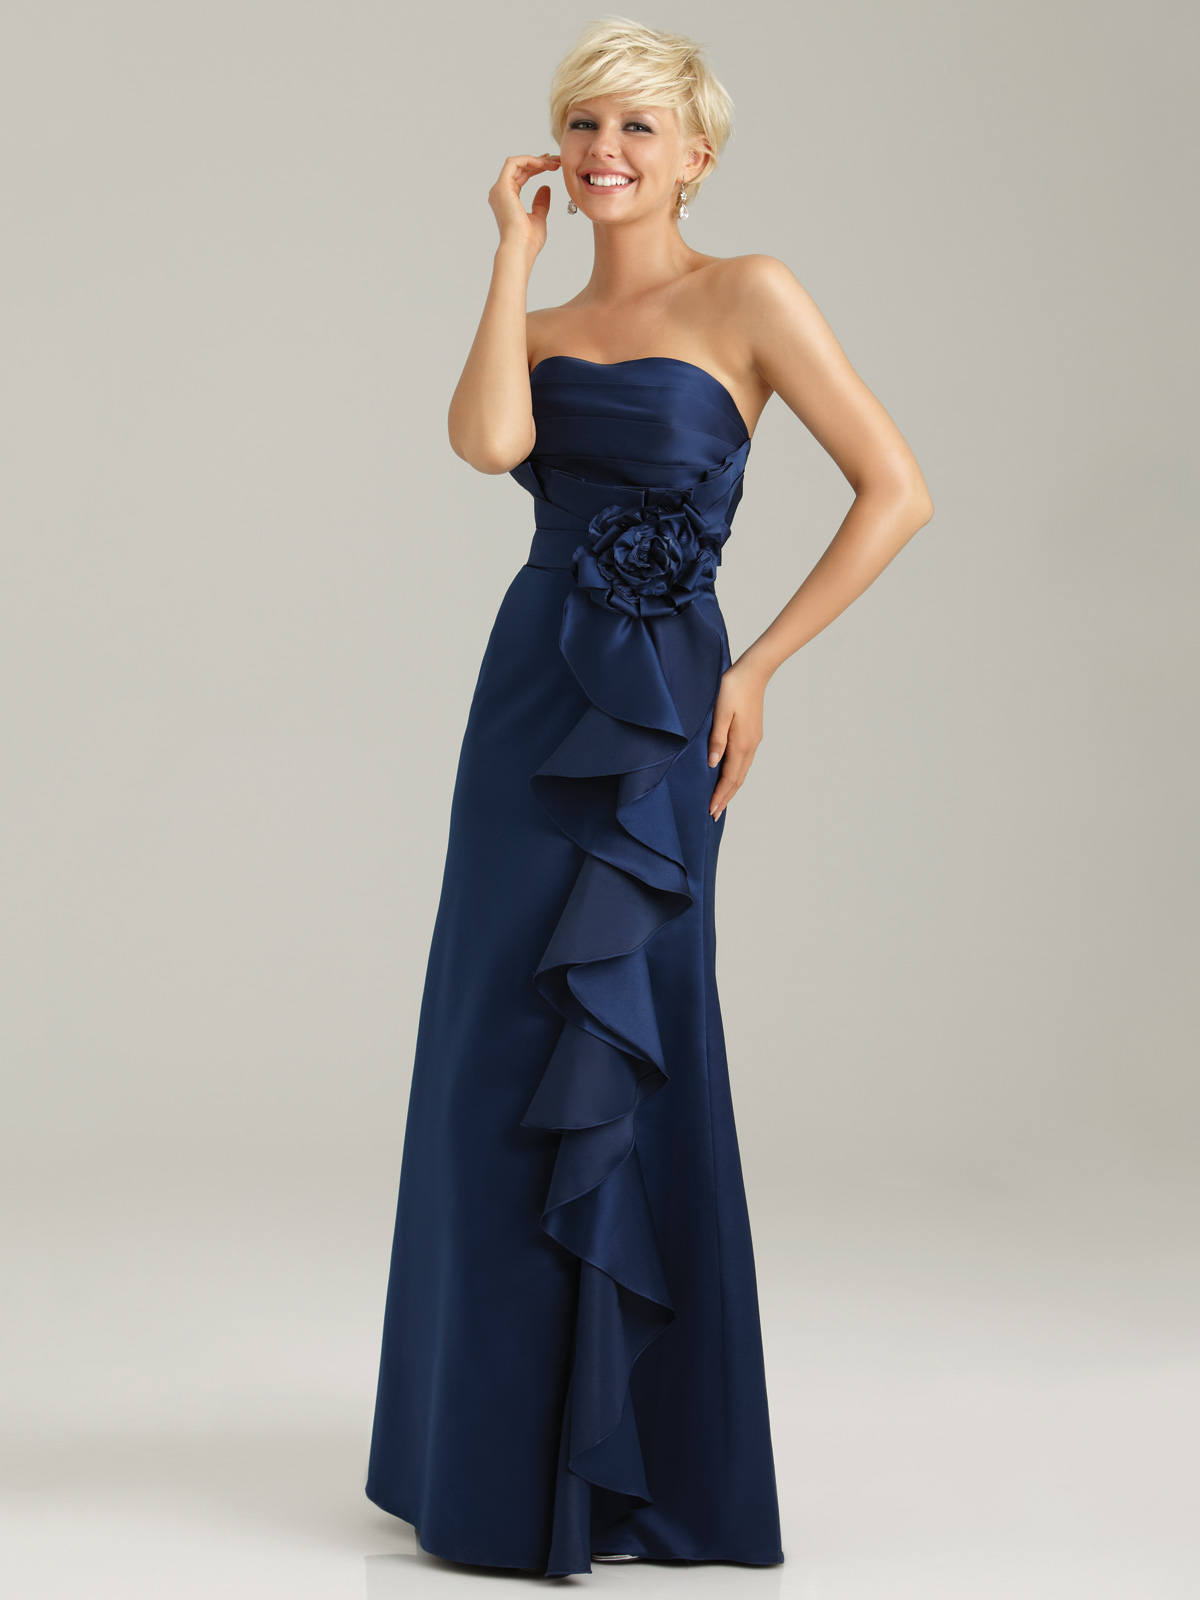 strapless navy blue bridesmaid dress